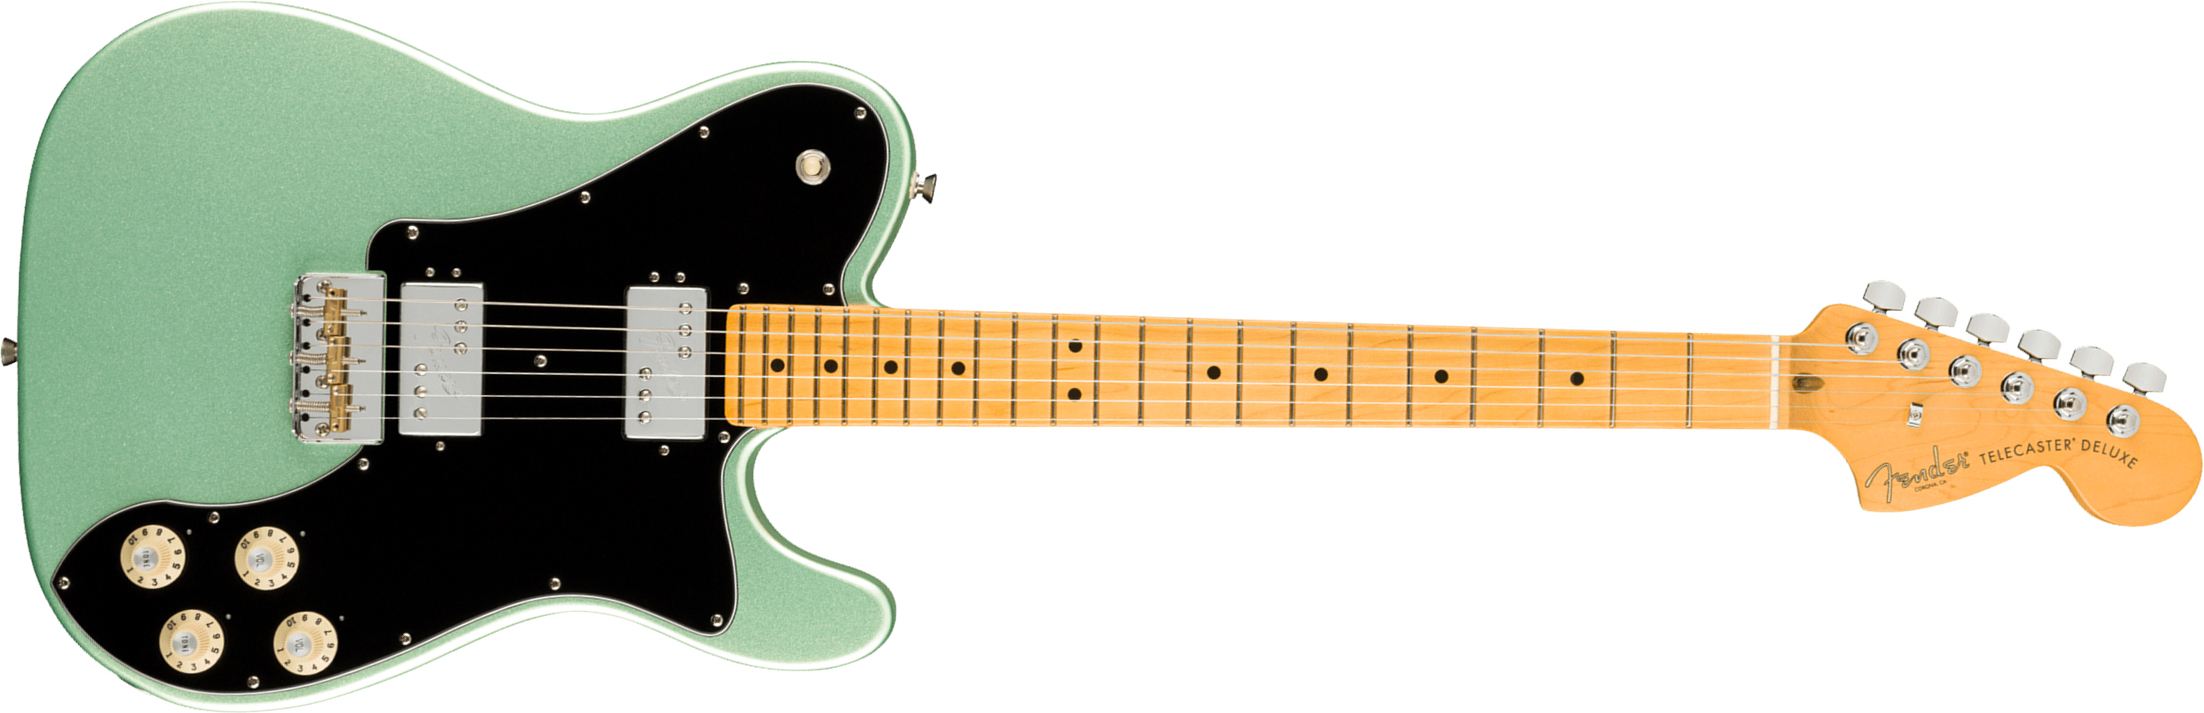 Fender Tele Deluxe American Professional Ii Usa Mn - Mystic Surf Green - Guitarra eléctrica con forma de tel - Main picture